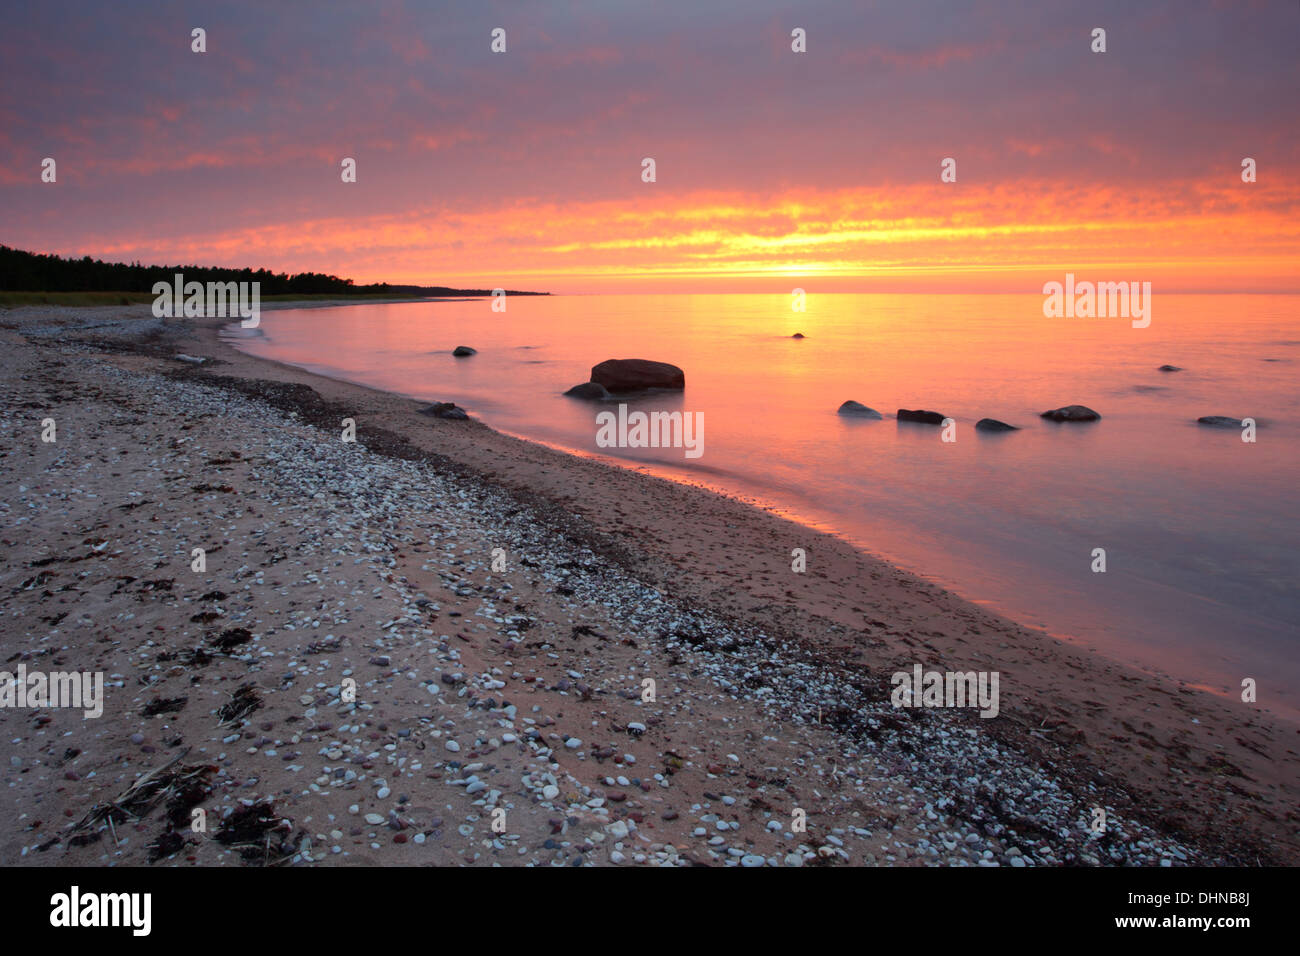 Sonnenuntergang auf der Insel Hiiumaa, Estland Stockfoto